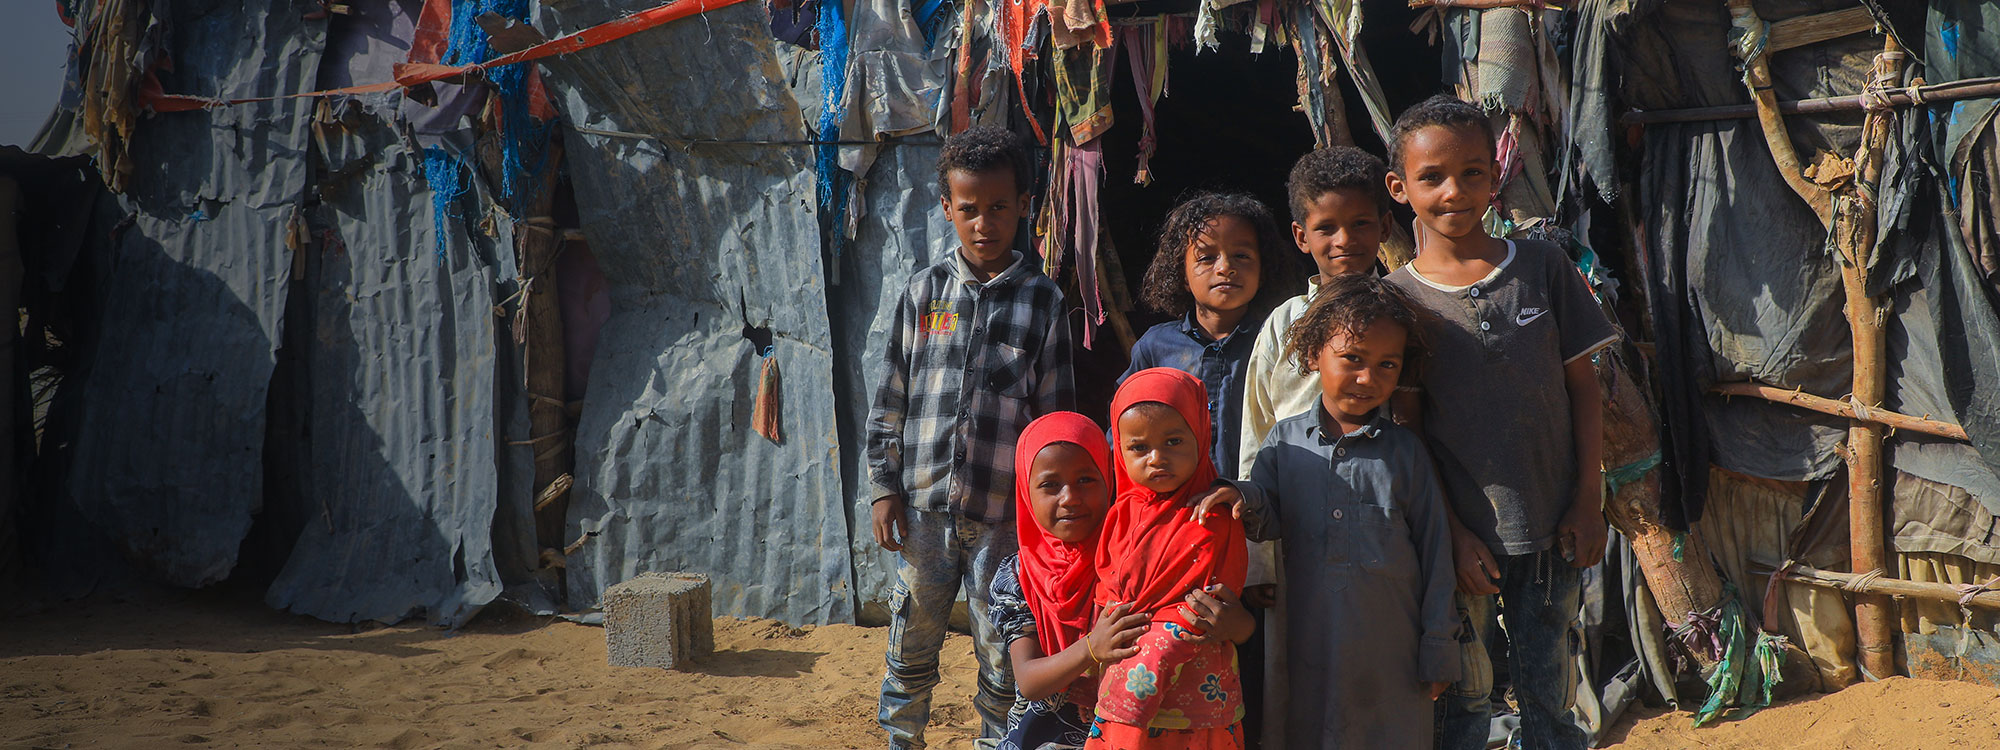 Yemeni children smiling in a group